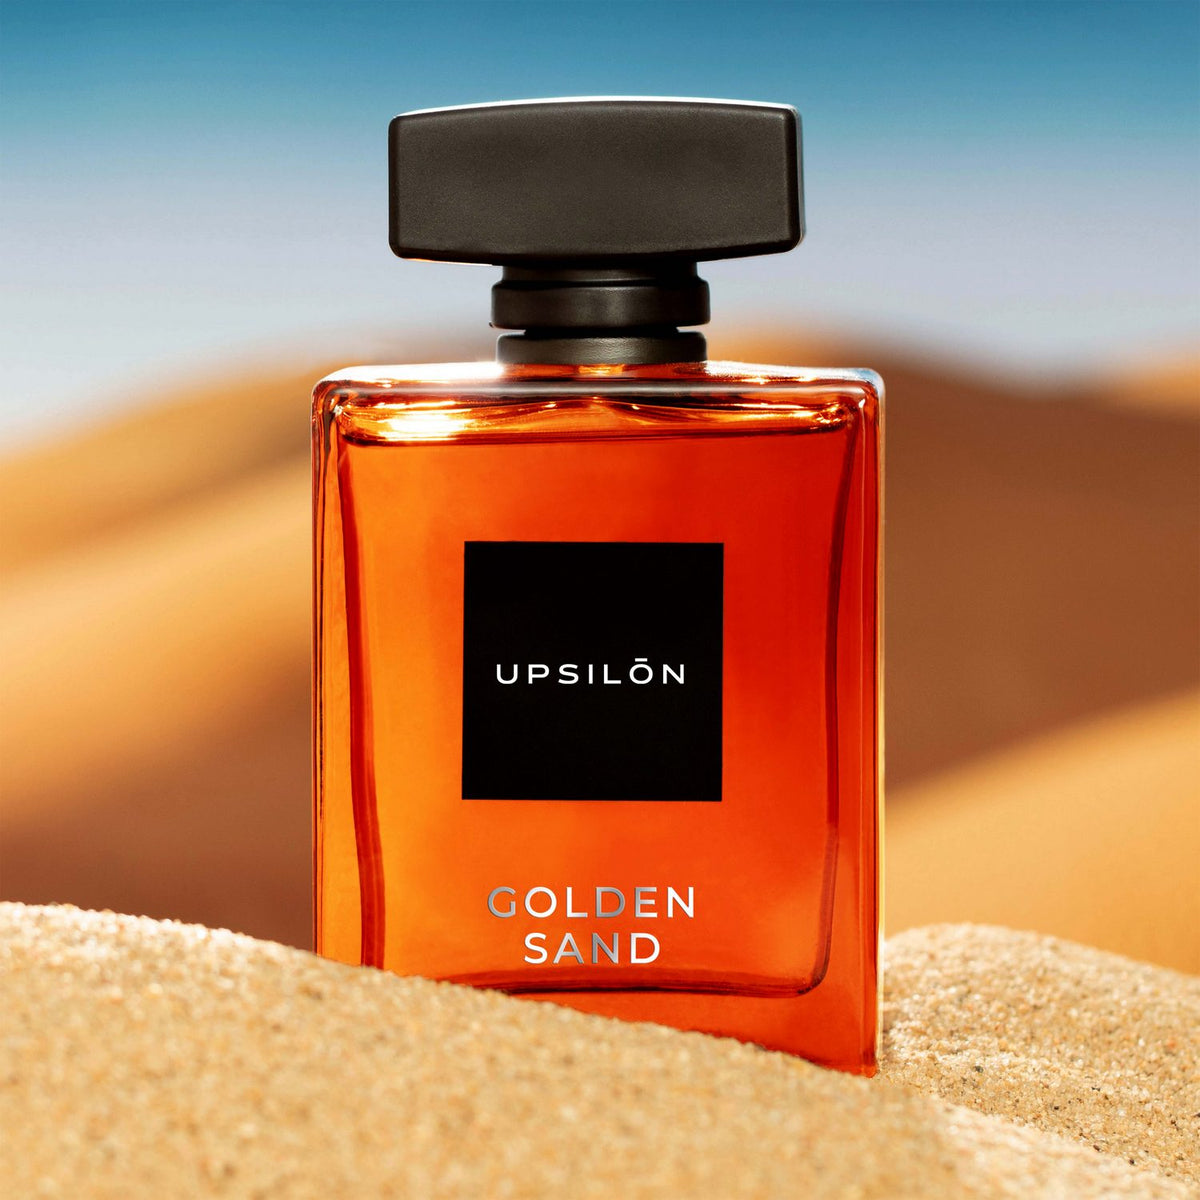 A bottle of UPSILON Golden Sand Eau de Parfum sitting on top of a pile of sand on a beach